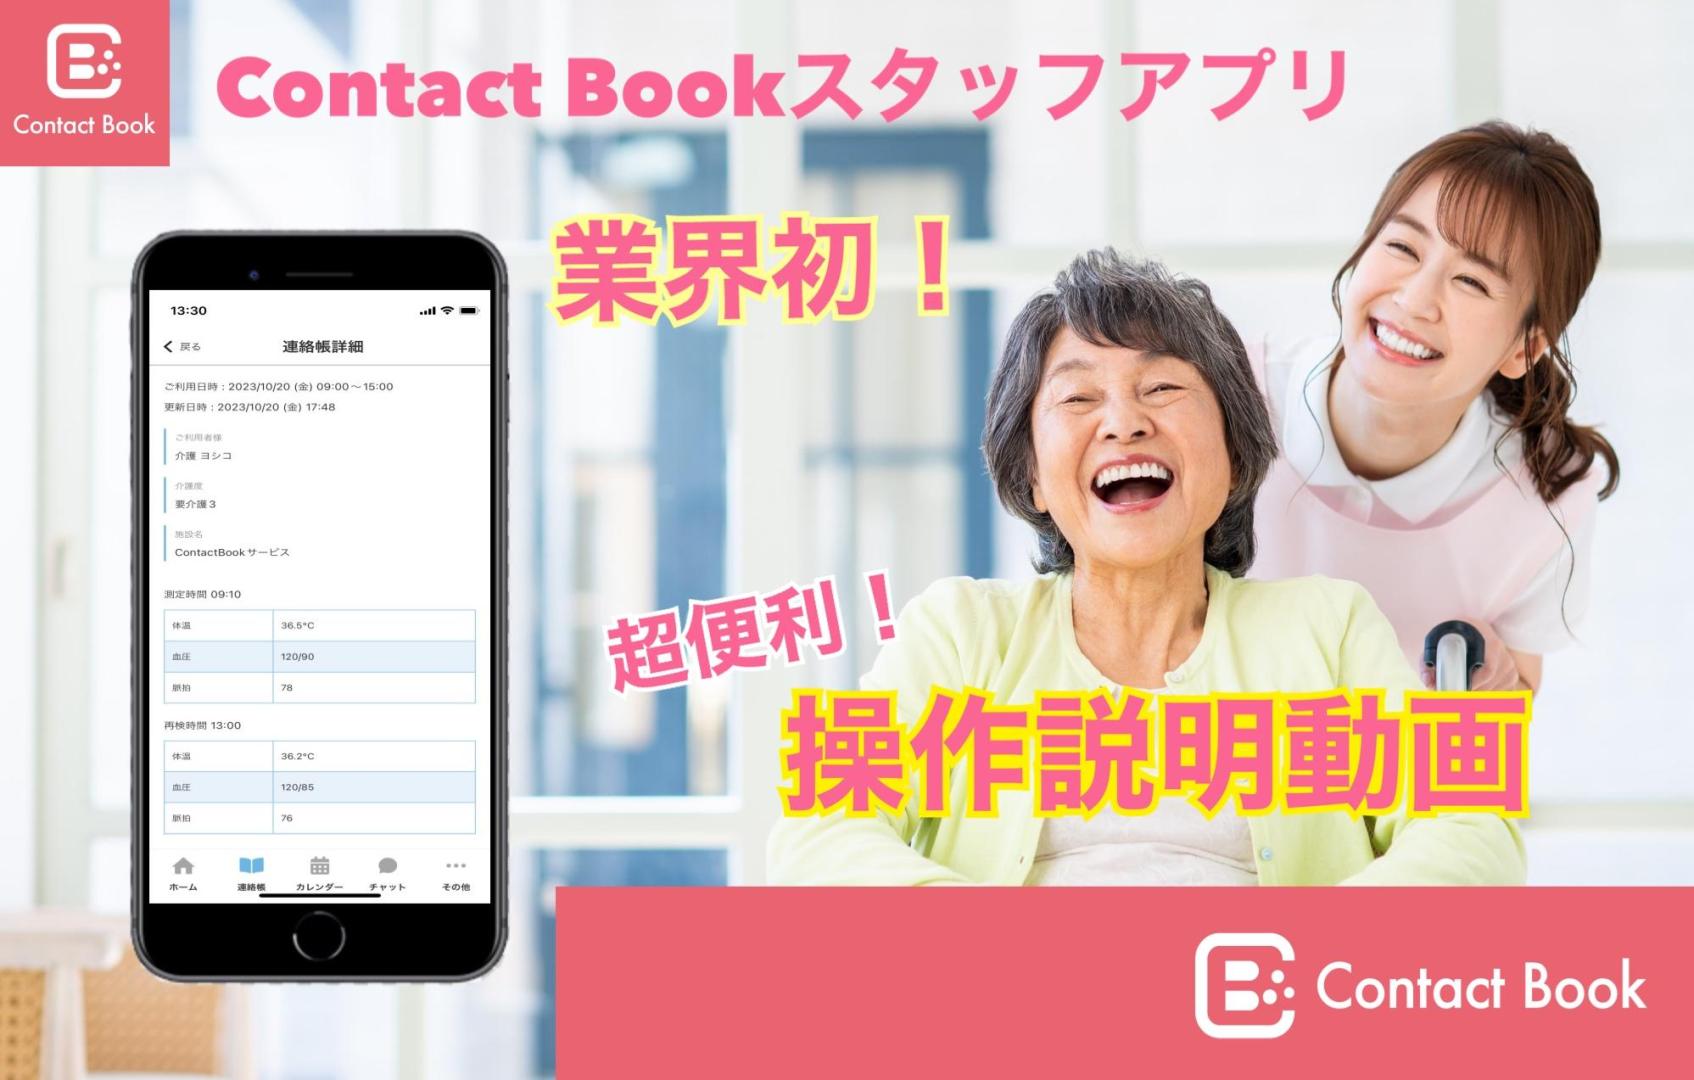 Contact Bookスタッフ版アプリ操作説明動画公開！